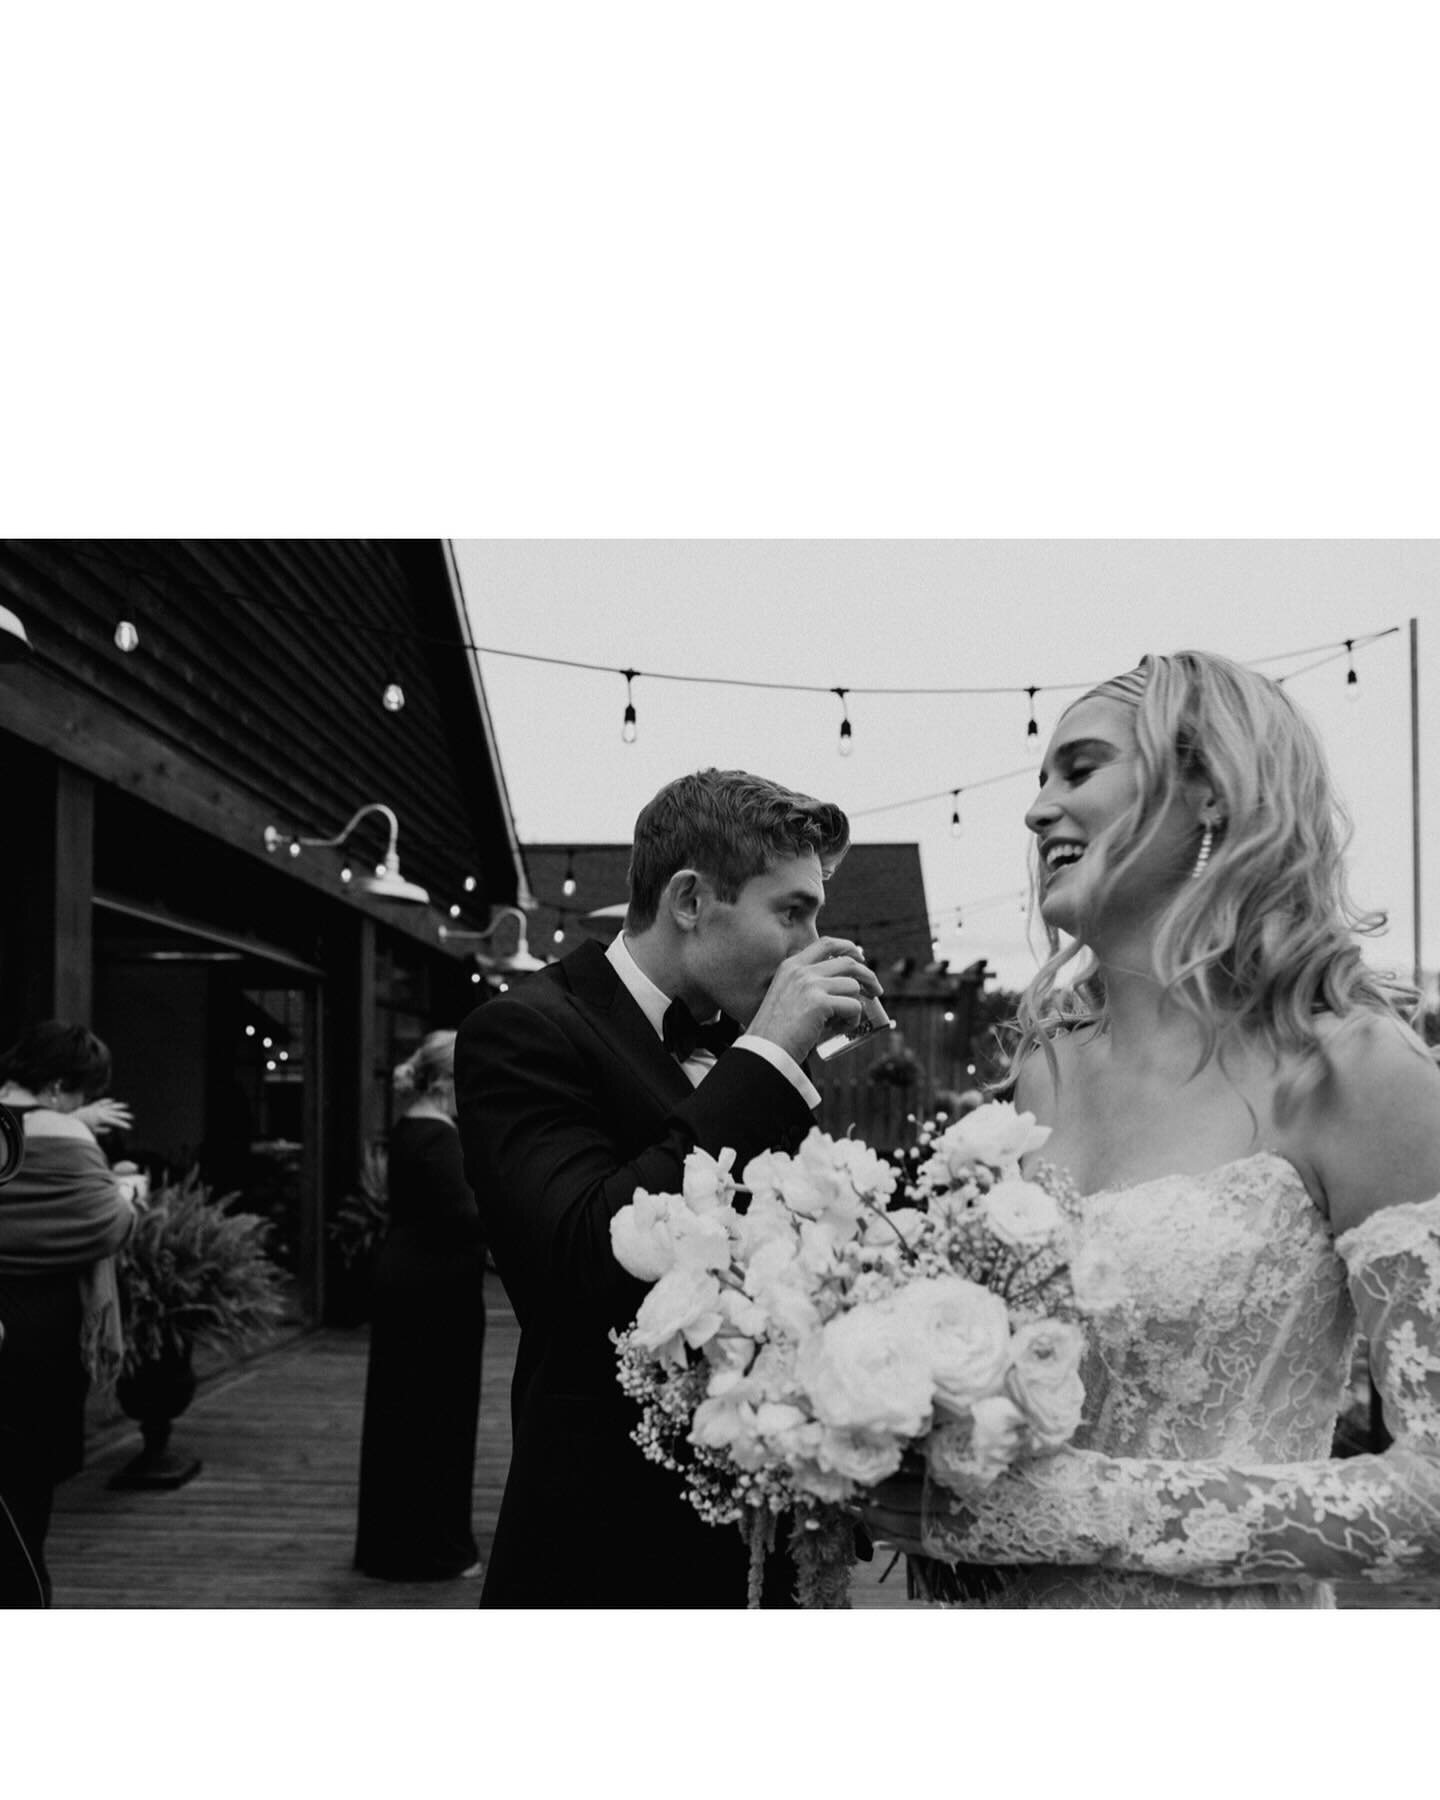 A little bit of Katie + Patrick in black and white 🤍🖤

#weddingday #detroitweddingphotographer #michiganwedding #candidweddingphotography #nearlywed #ruffledblog #thewed #togetherjournal #greenweddingshoes